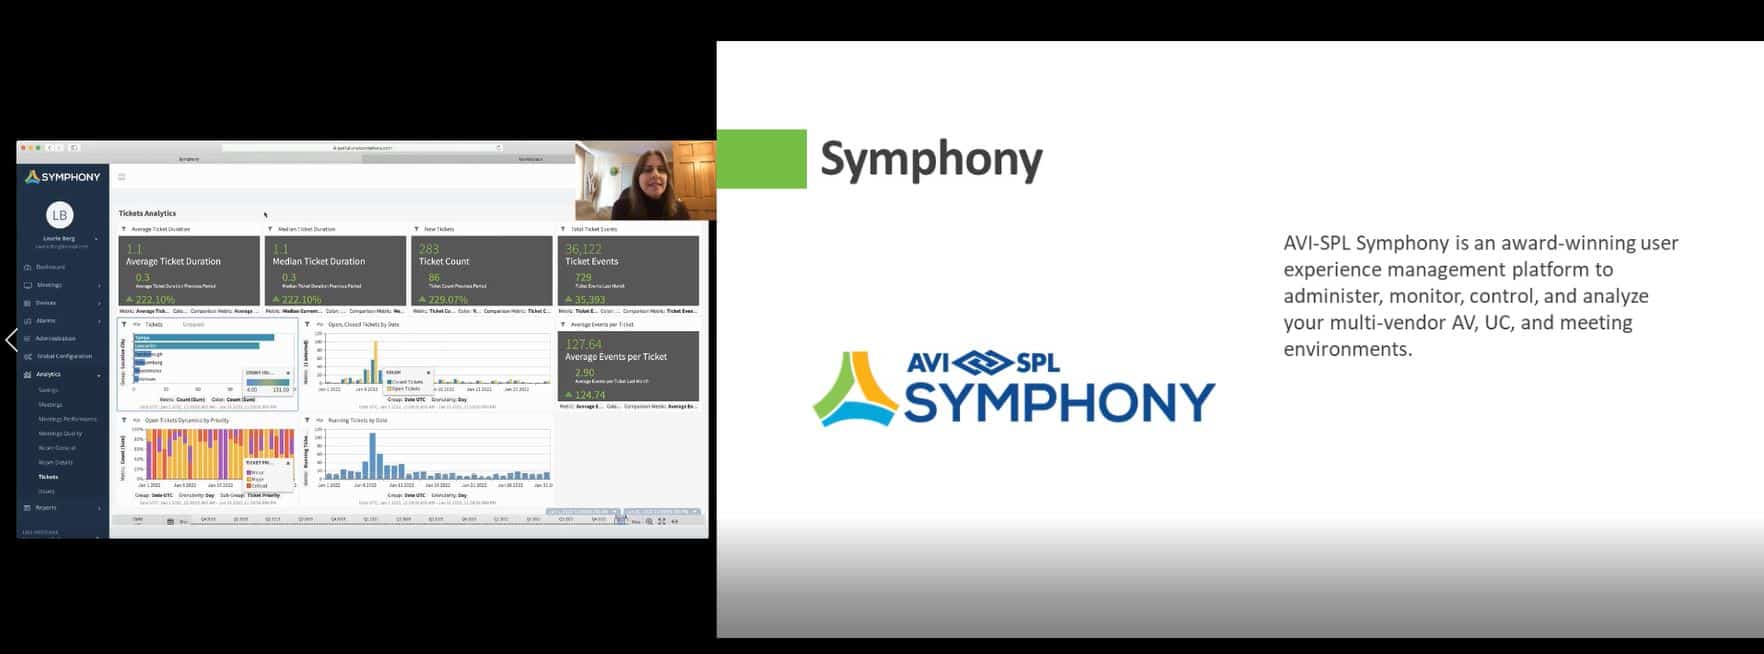 ensuring excellent hybrid meetings symphonyscreenshot demo